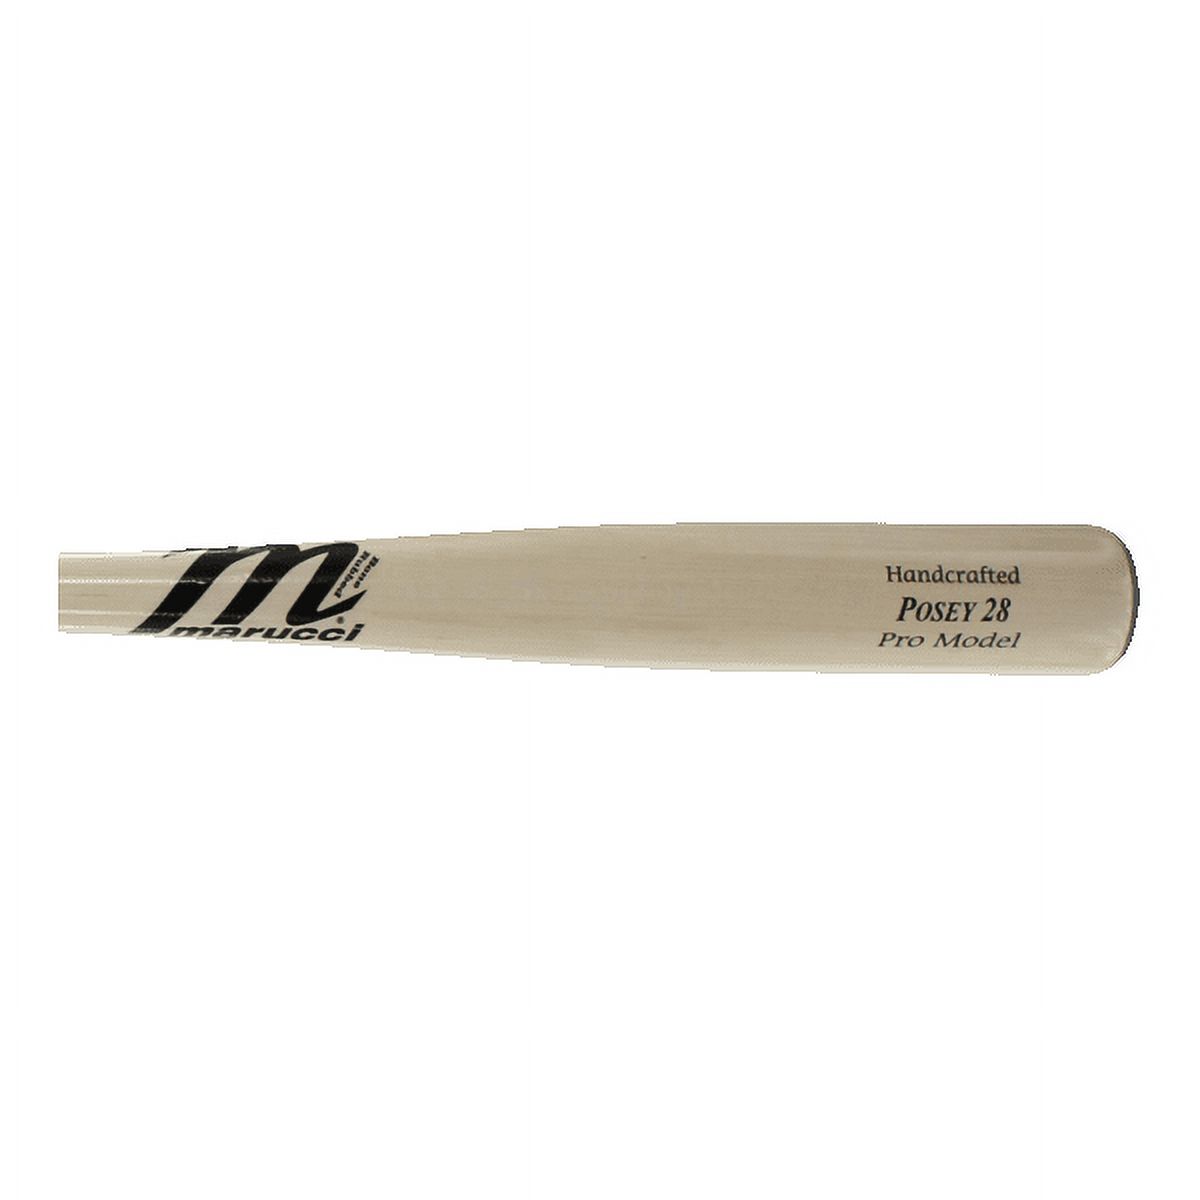 Marucci Buster Posey Maple Wood Baseball Bat: POSEY28 Whitewash Adult - image 2 of 5